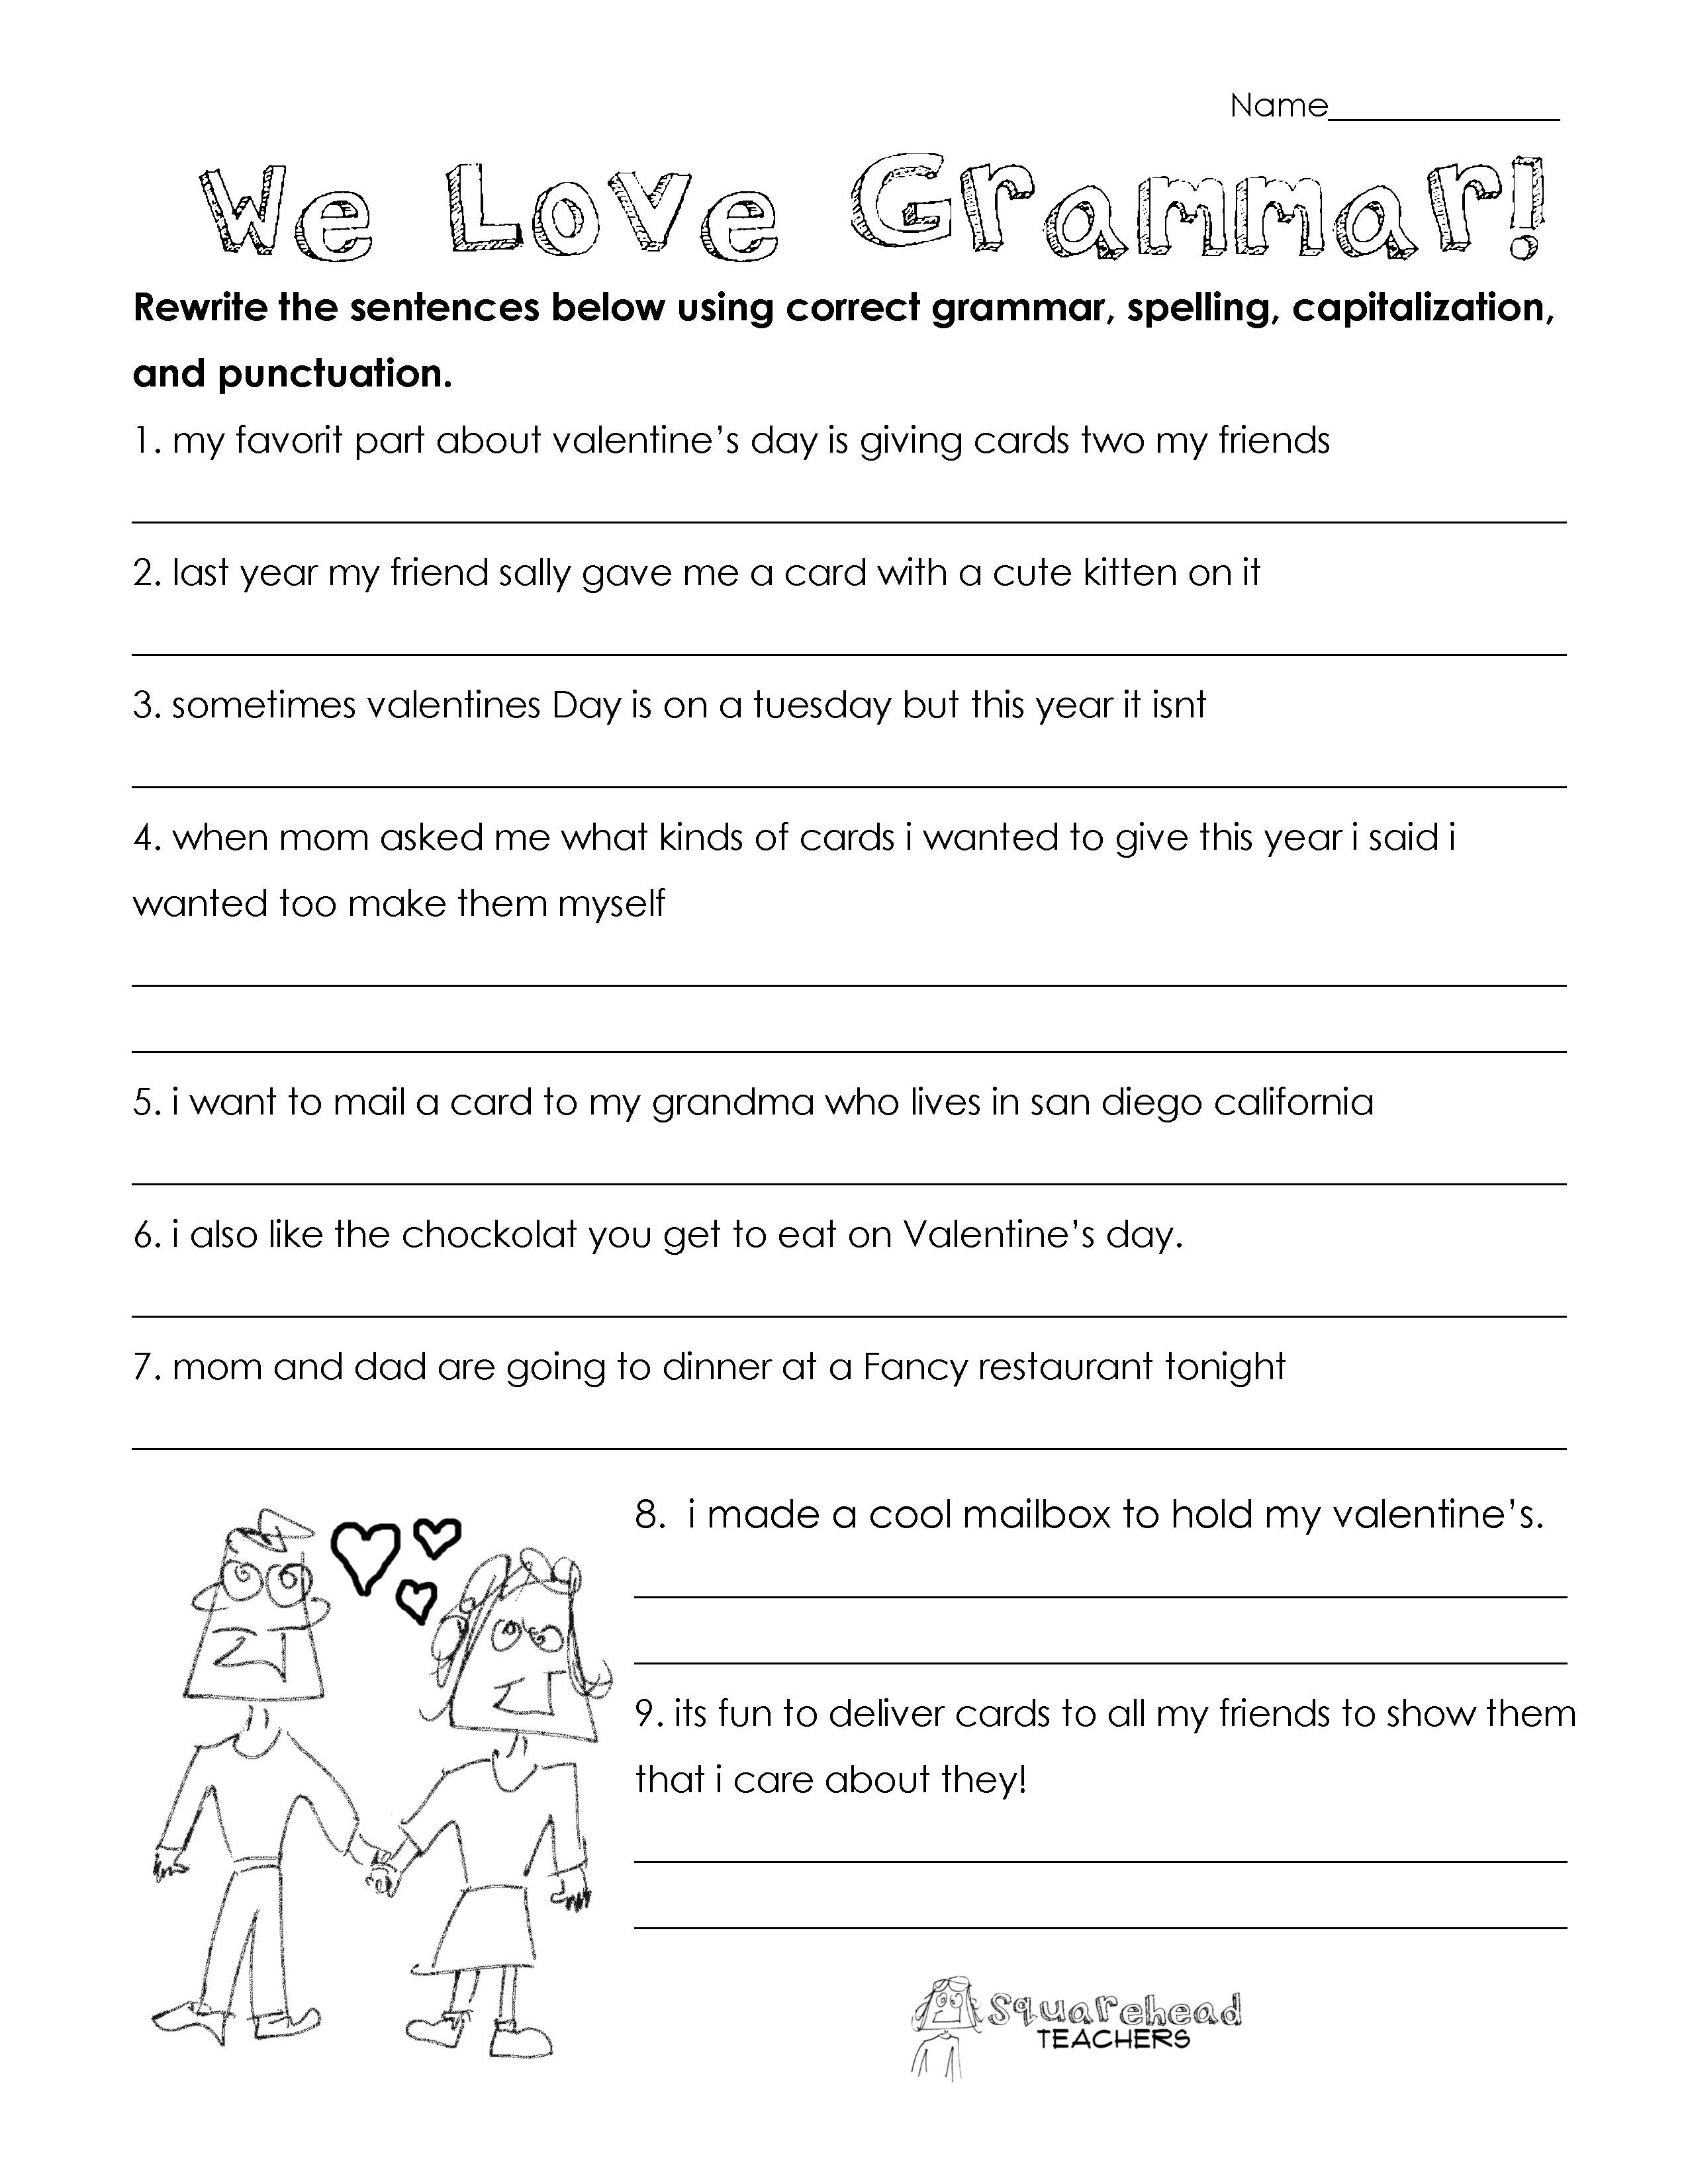 3rd Grade Grammar Worksheets Valentine S Day Grammar Free Worksheet for 3rd Grade and Up